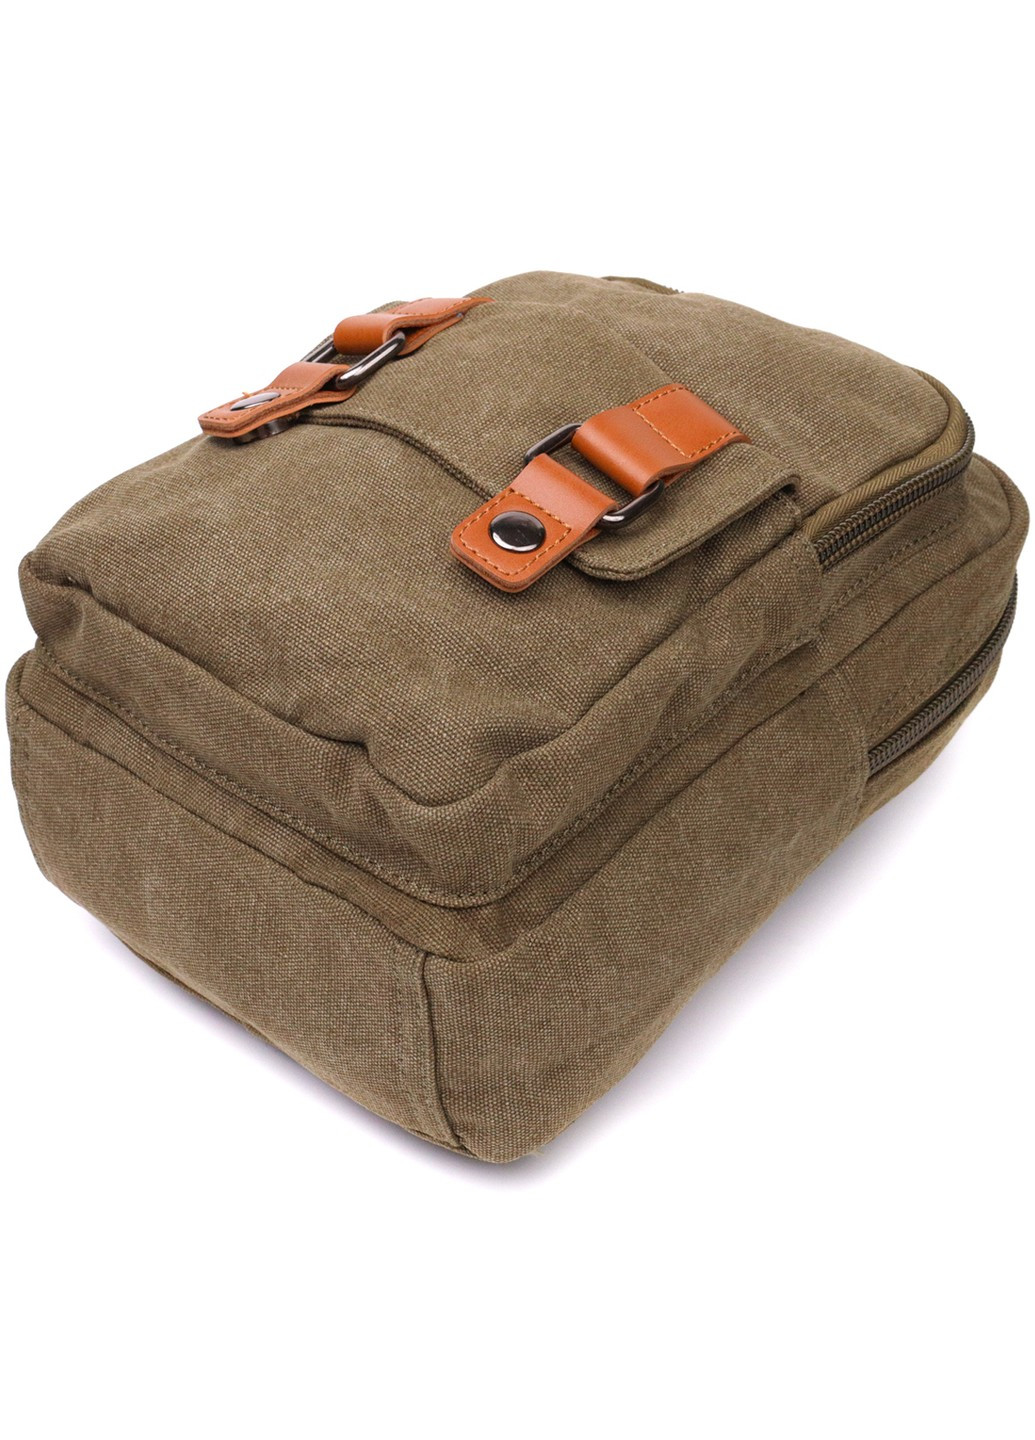 Сумка-рюкзак в стиле милитари с двумя отделениями из плотного текстиля 22163 Оливковый Vintage (267925358)